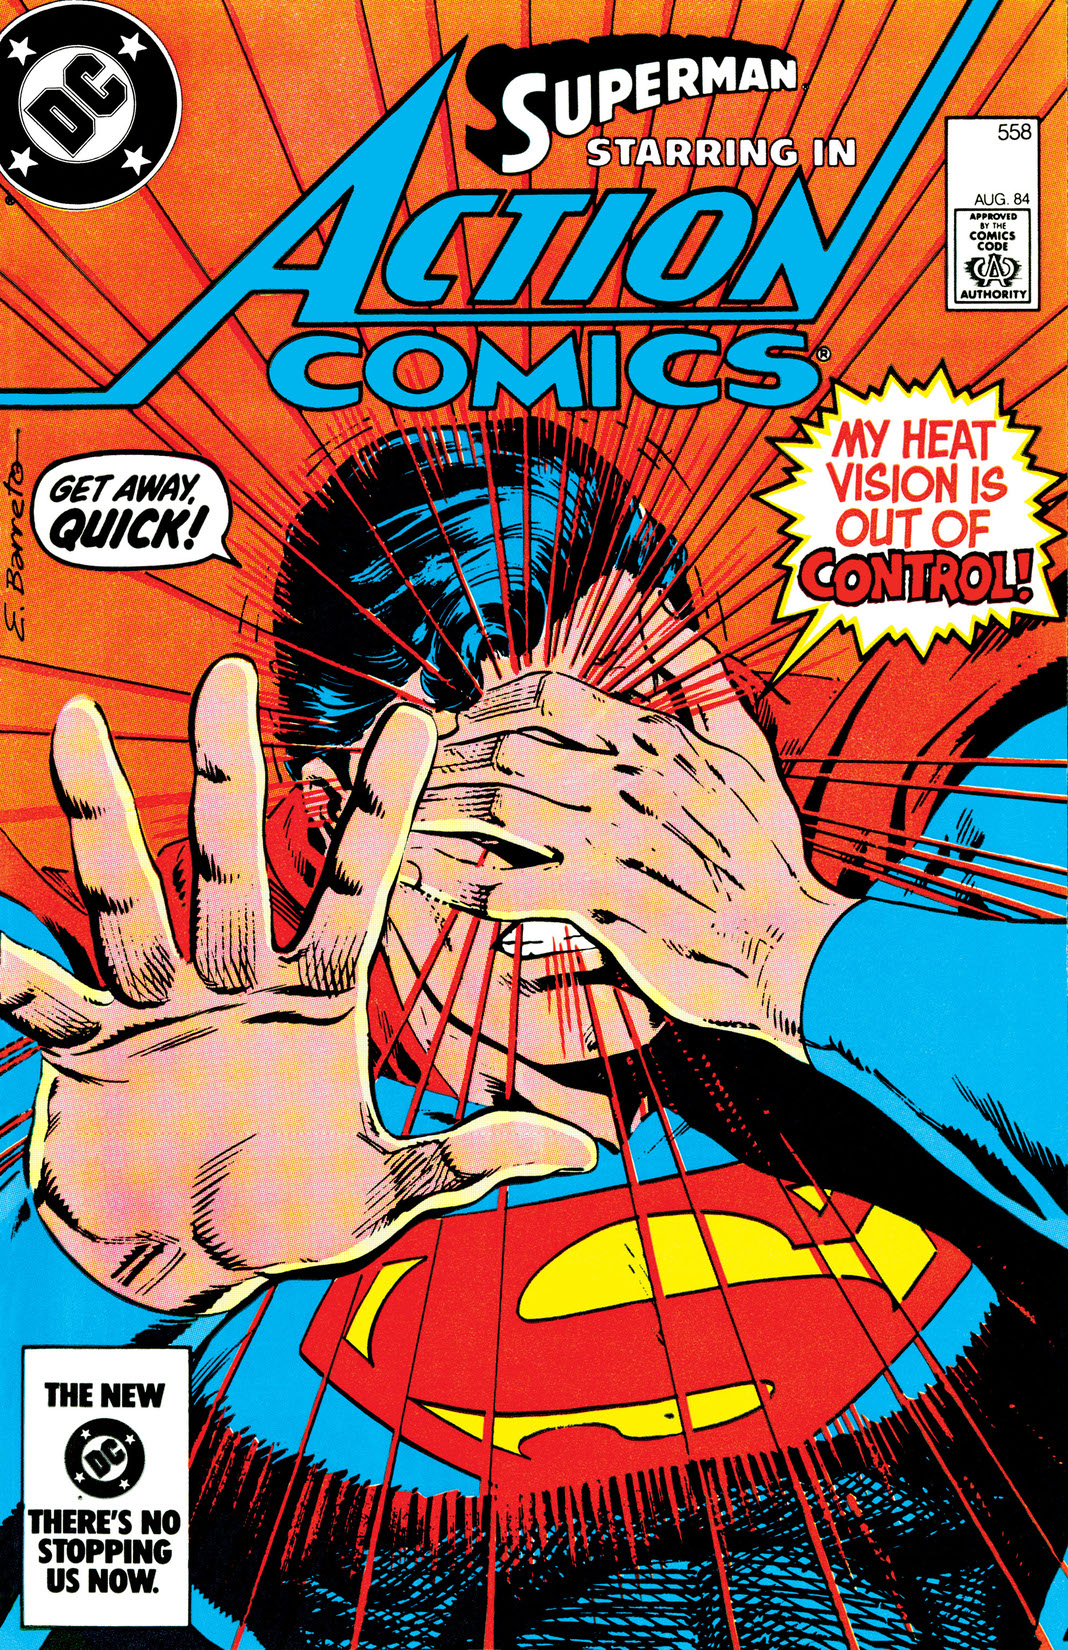 Action Comics (1938-) #558 preview images